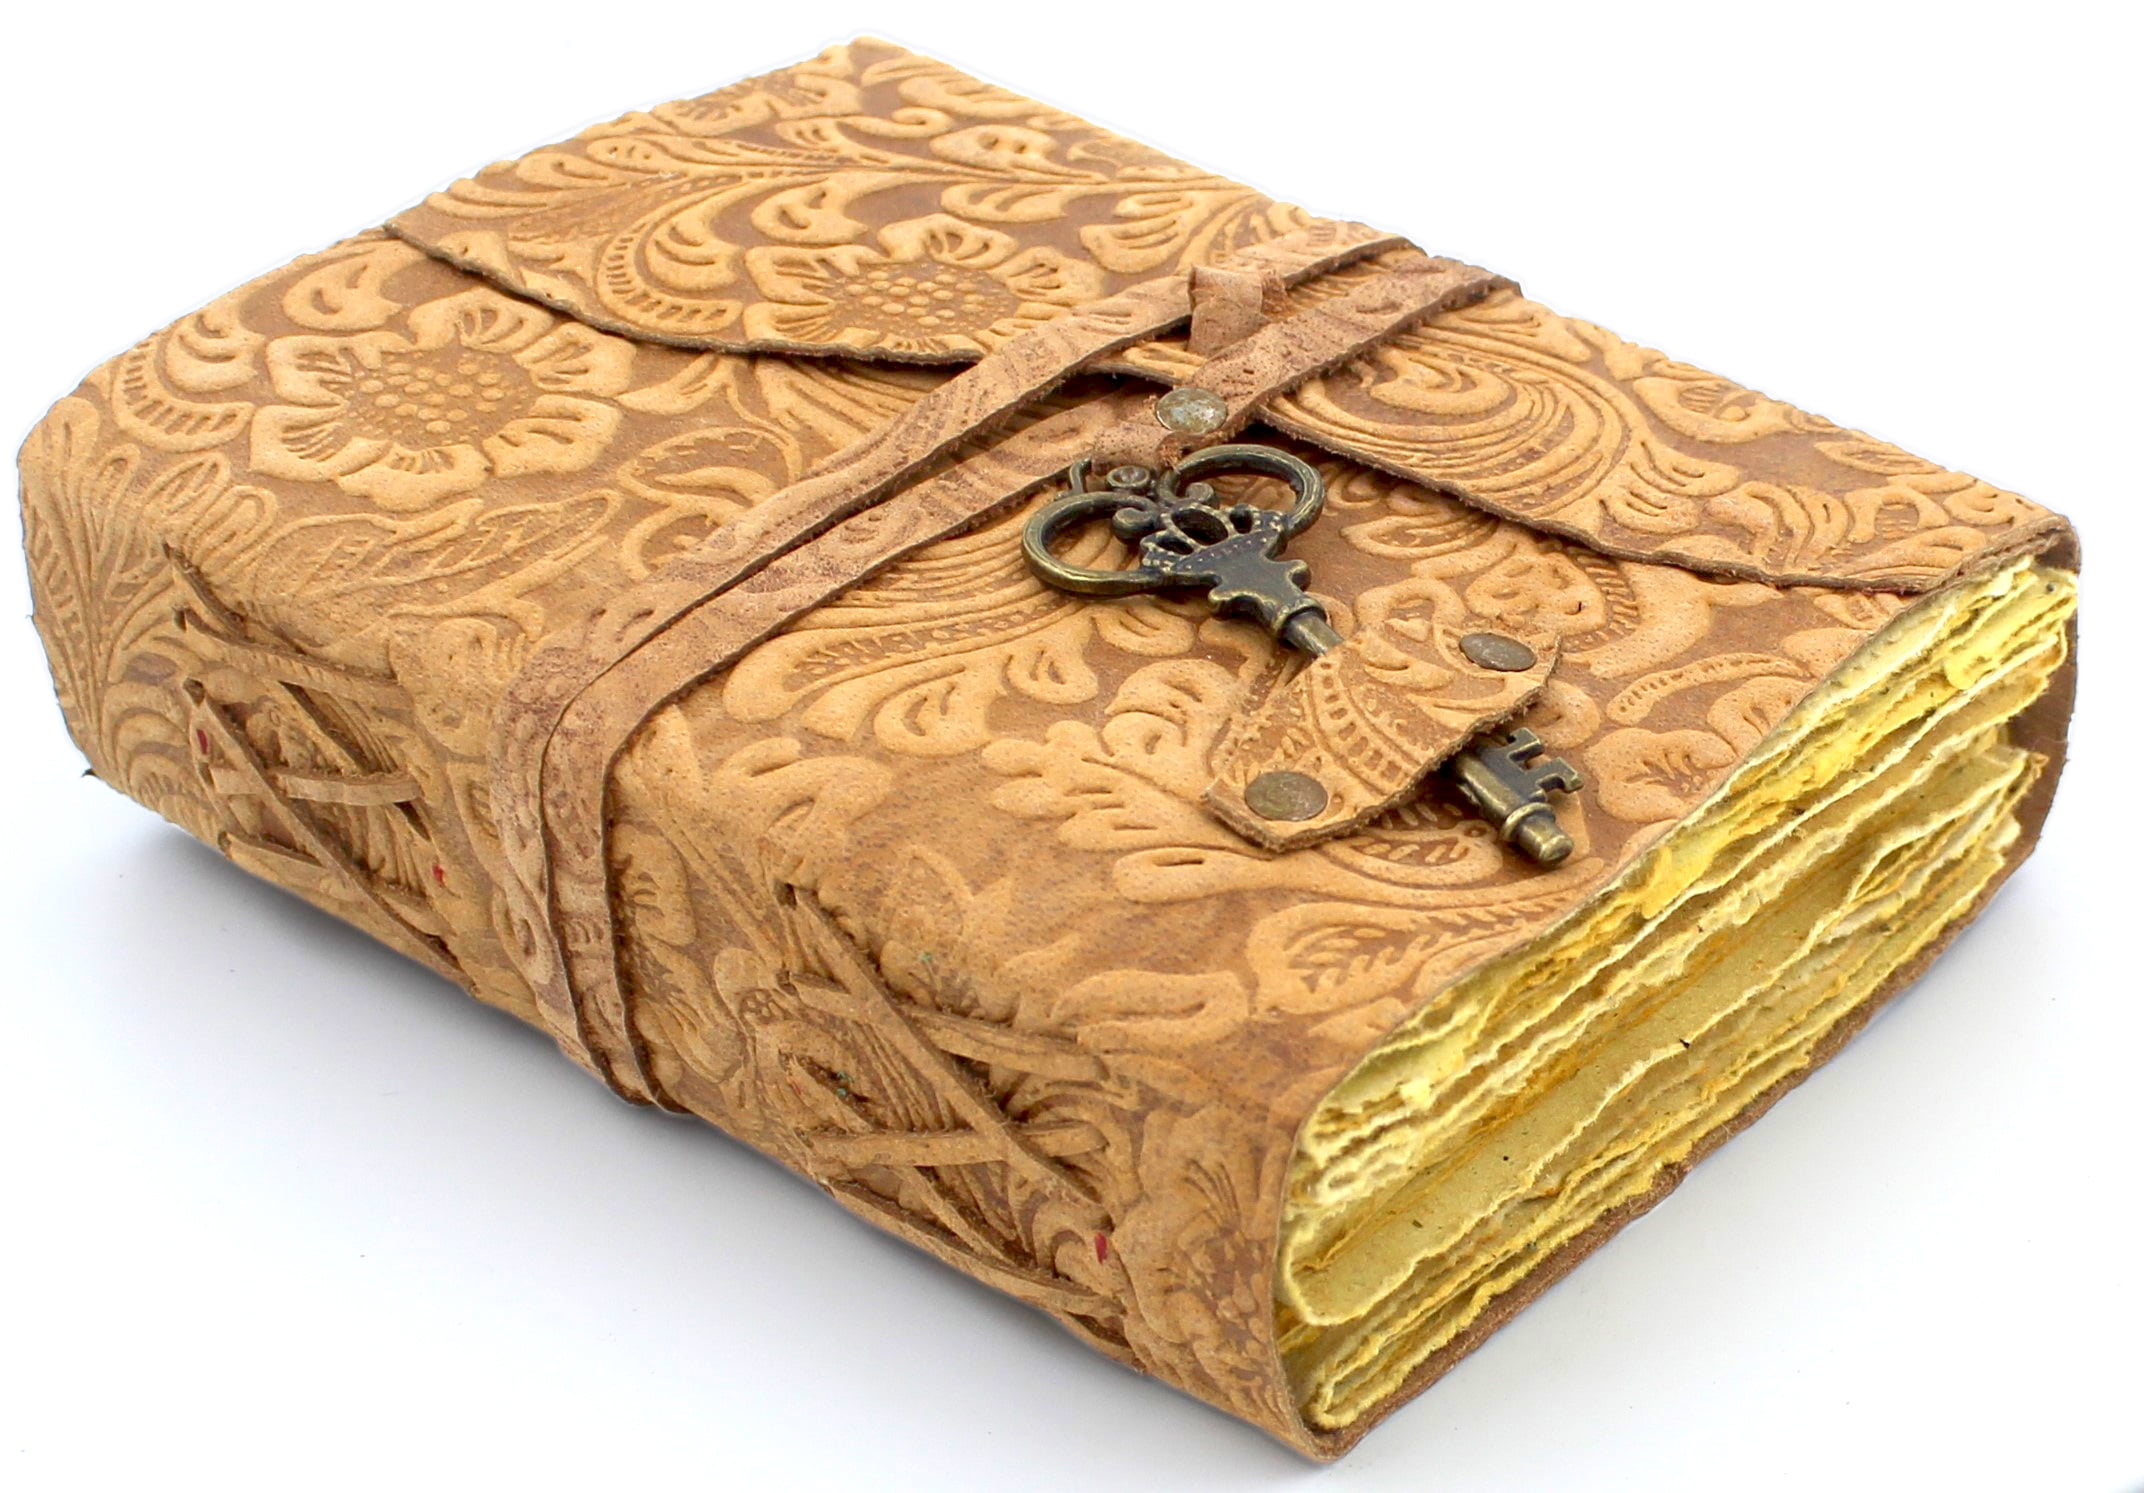 Medieval metallic gold sketchbook journal 5x7 inch. Antique embossed h –  Vintage India Ca